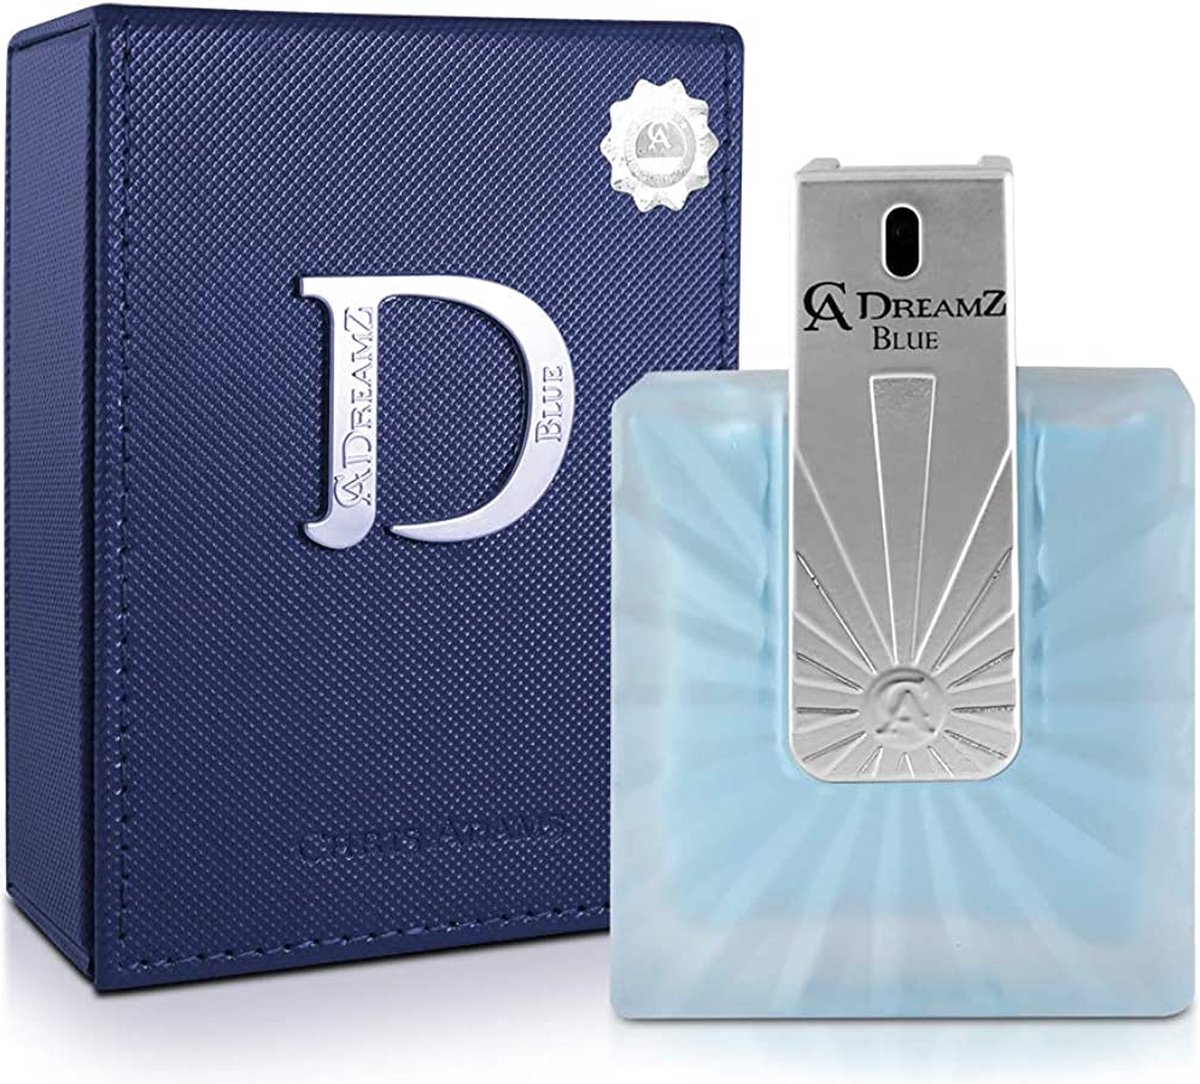 Chris Adams Dreamz Blue Parfum Voor Mannen 100ml Edp